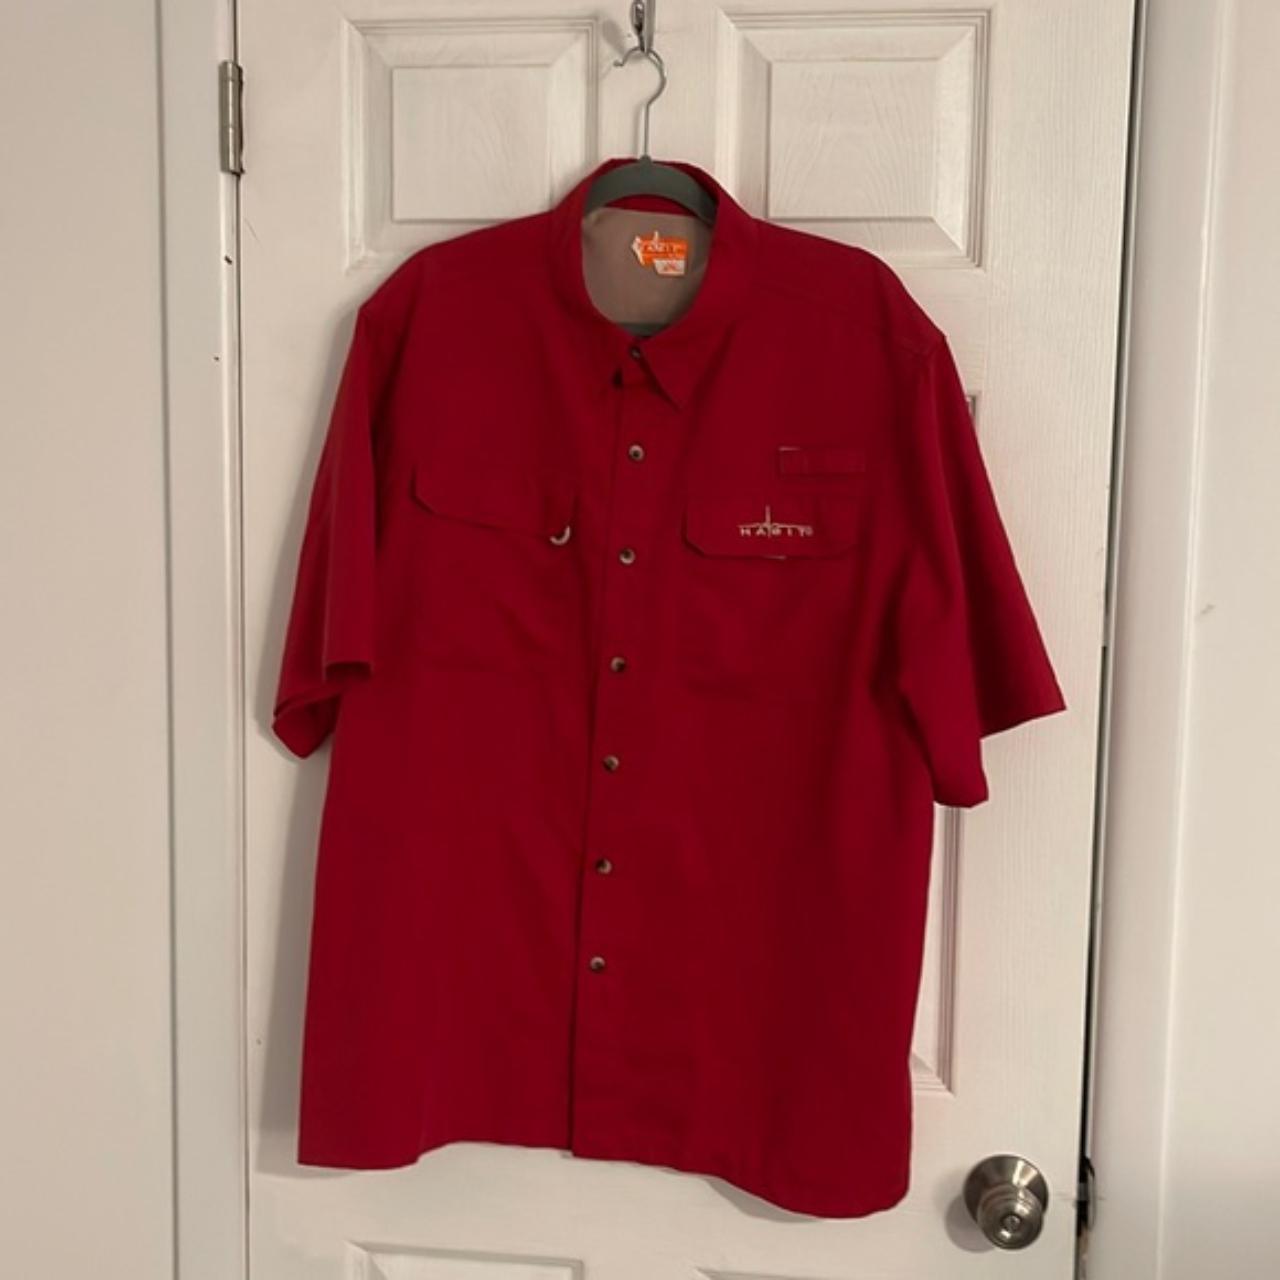 Habit Vented Fishing Shirt Red Short-Sleeve Men's - Depop